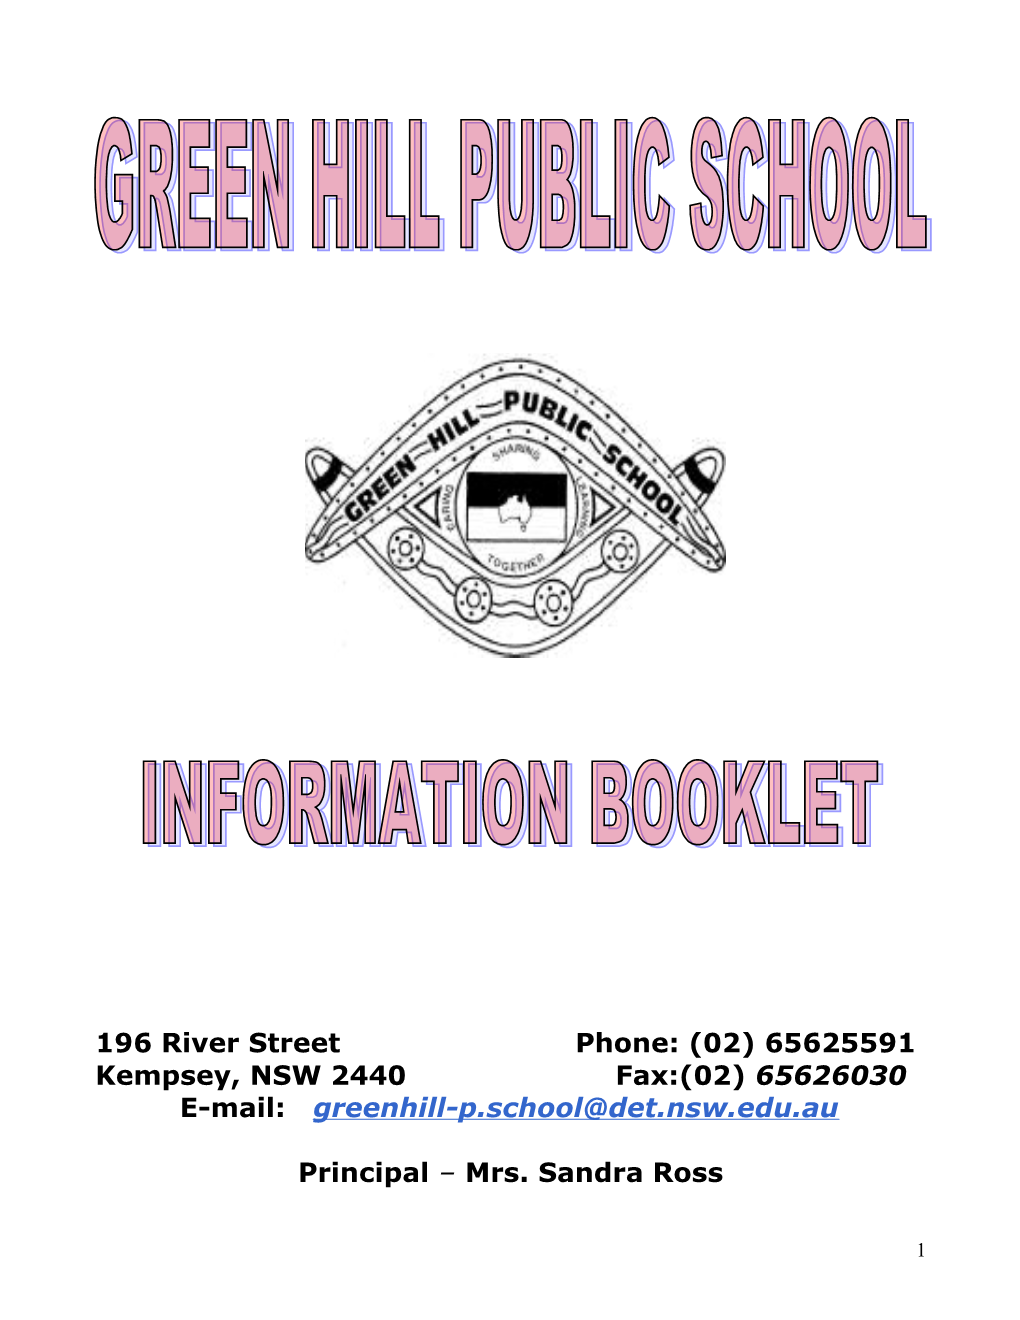 Greenhill Public School